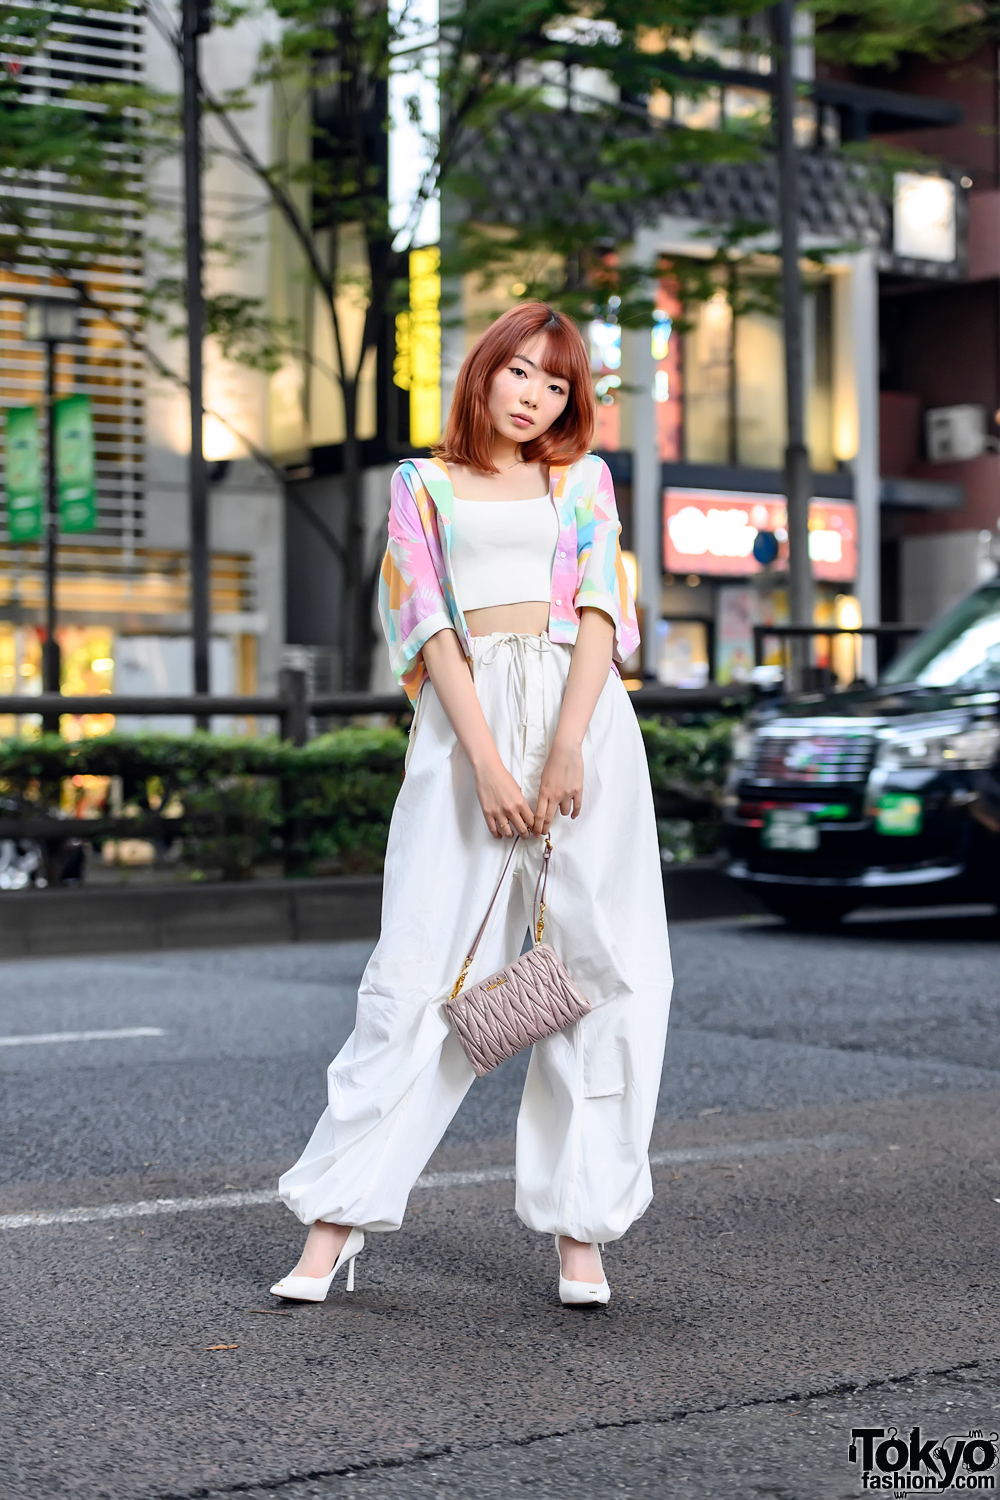 Japanese Model in Harajuku w/ Orange Hair, Vintage High Waist Pants, Crop Top & MiuMiu Bag